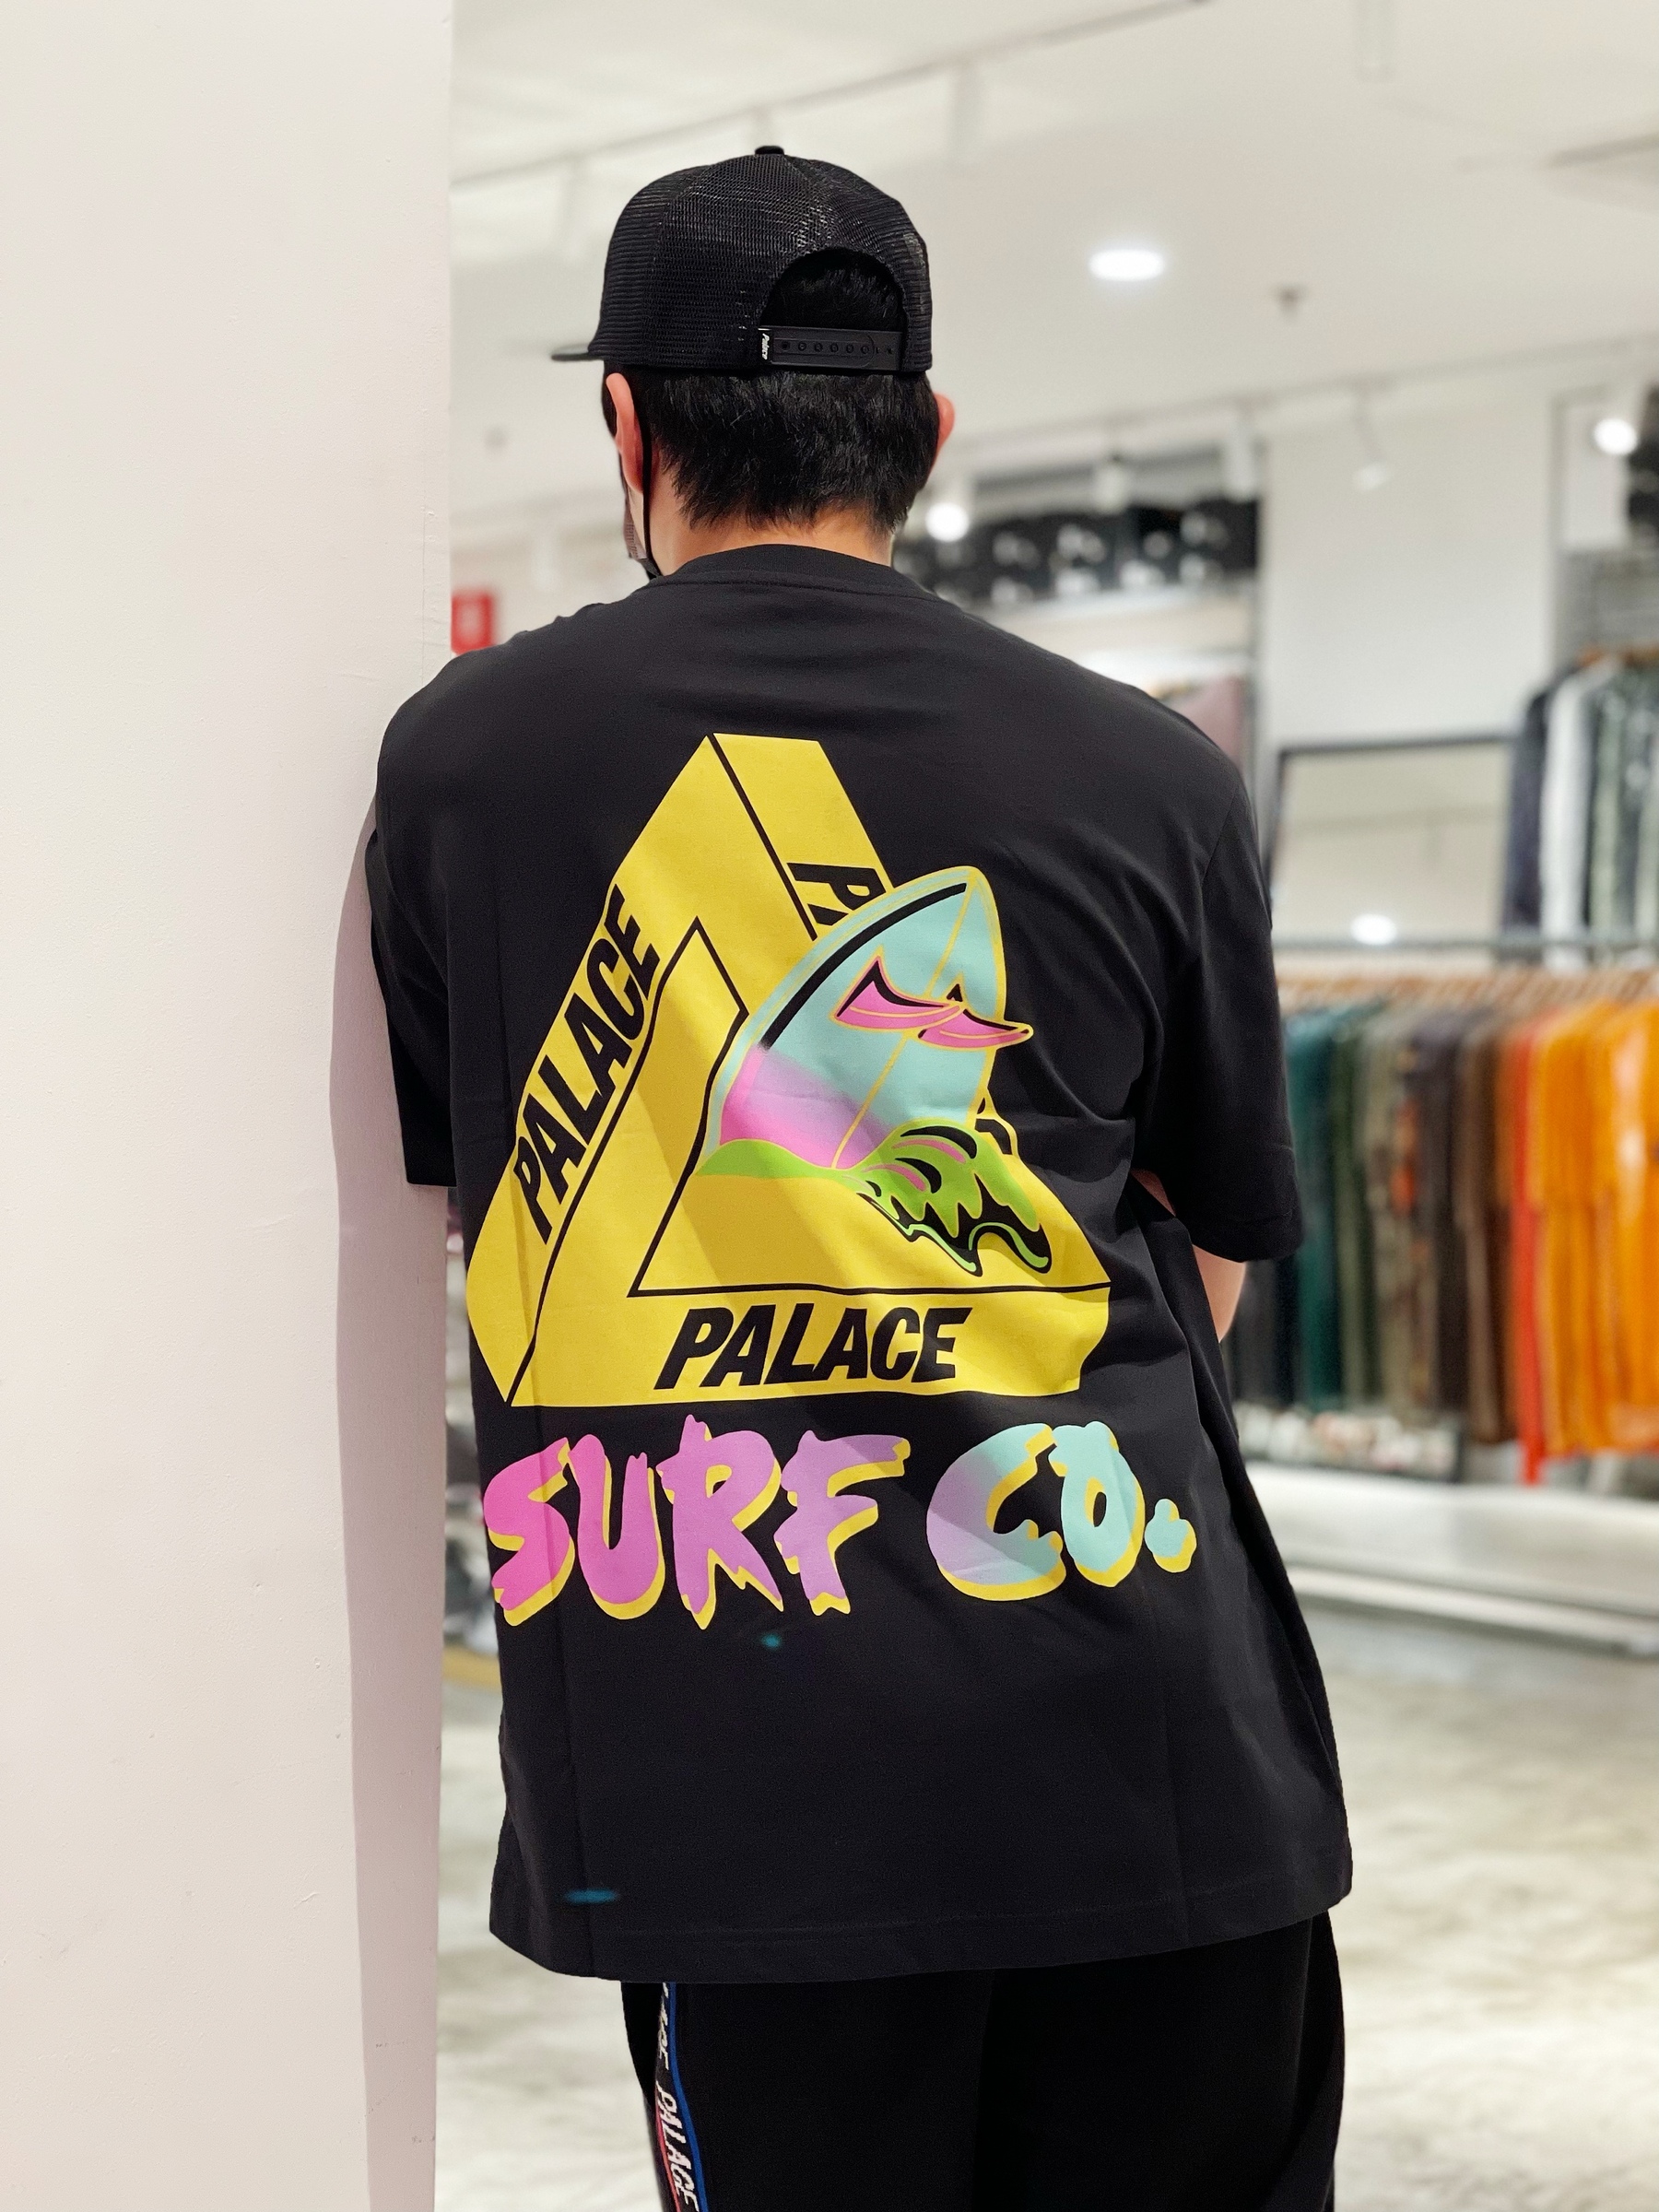 Palace Tri-Surf Co T-shirt Navy